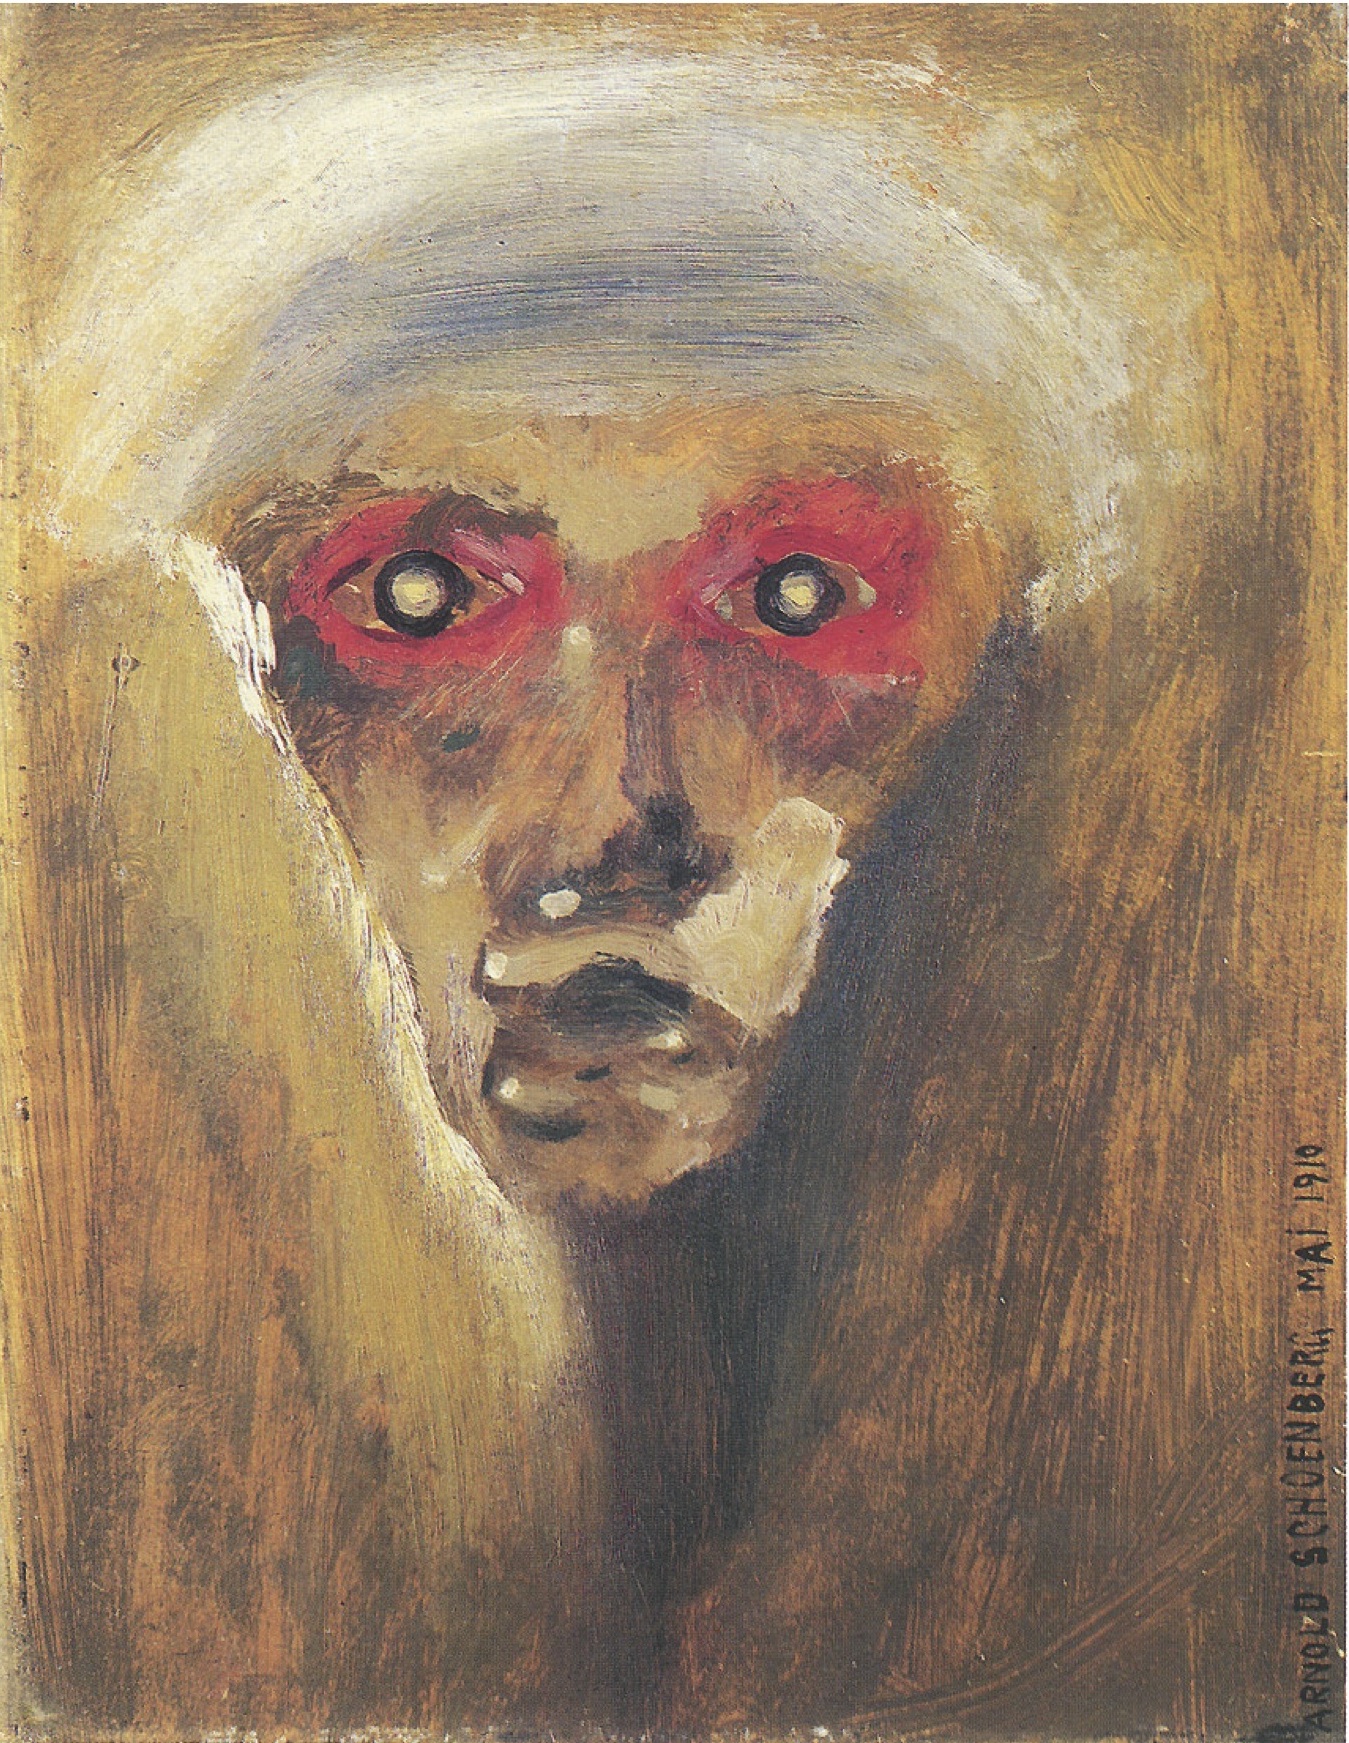 Schoenberg’s Pierrot Lunaire image